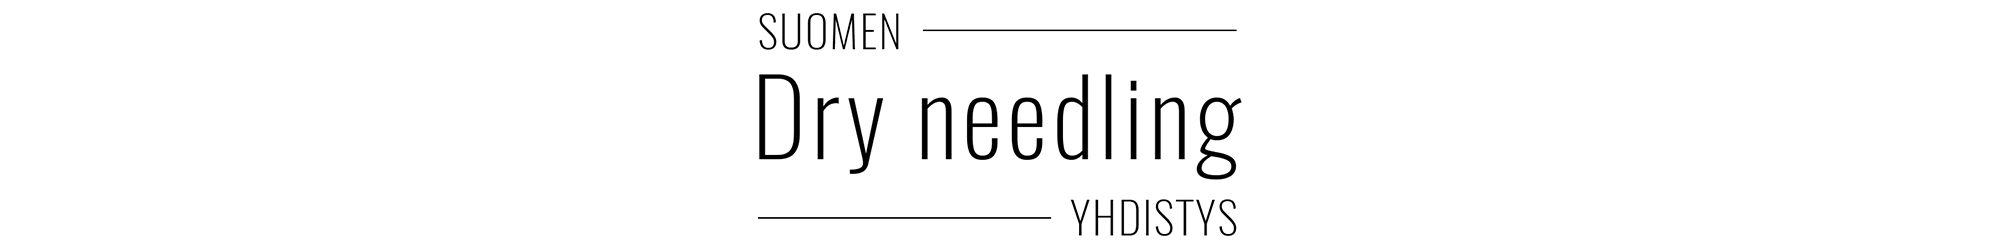 Suomen_dry_needling_yhdistys-logo-1.png